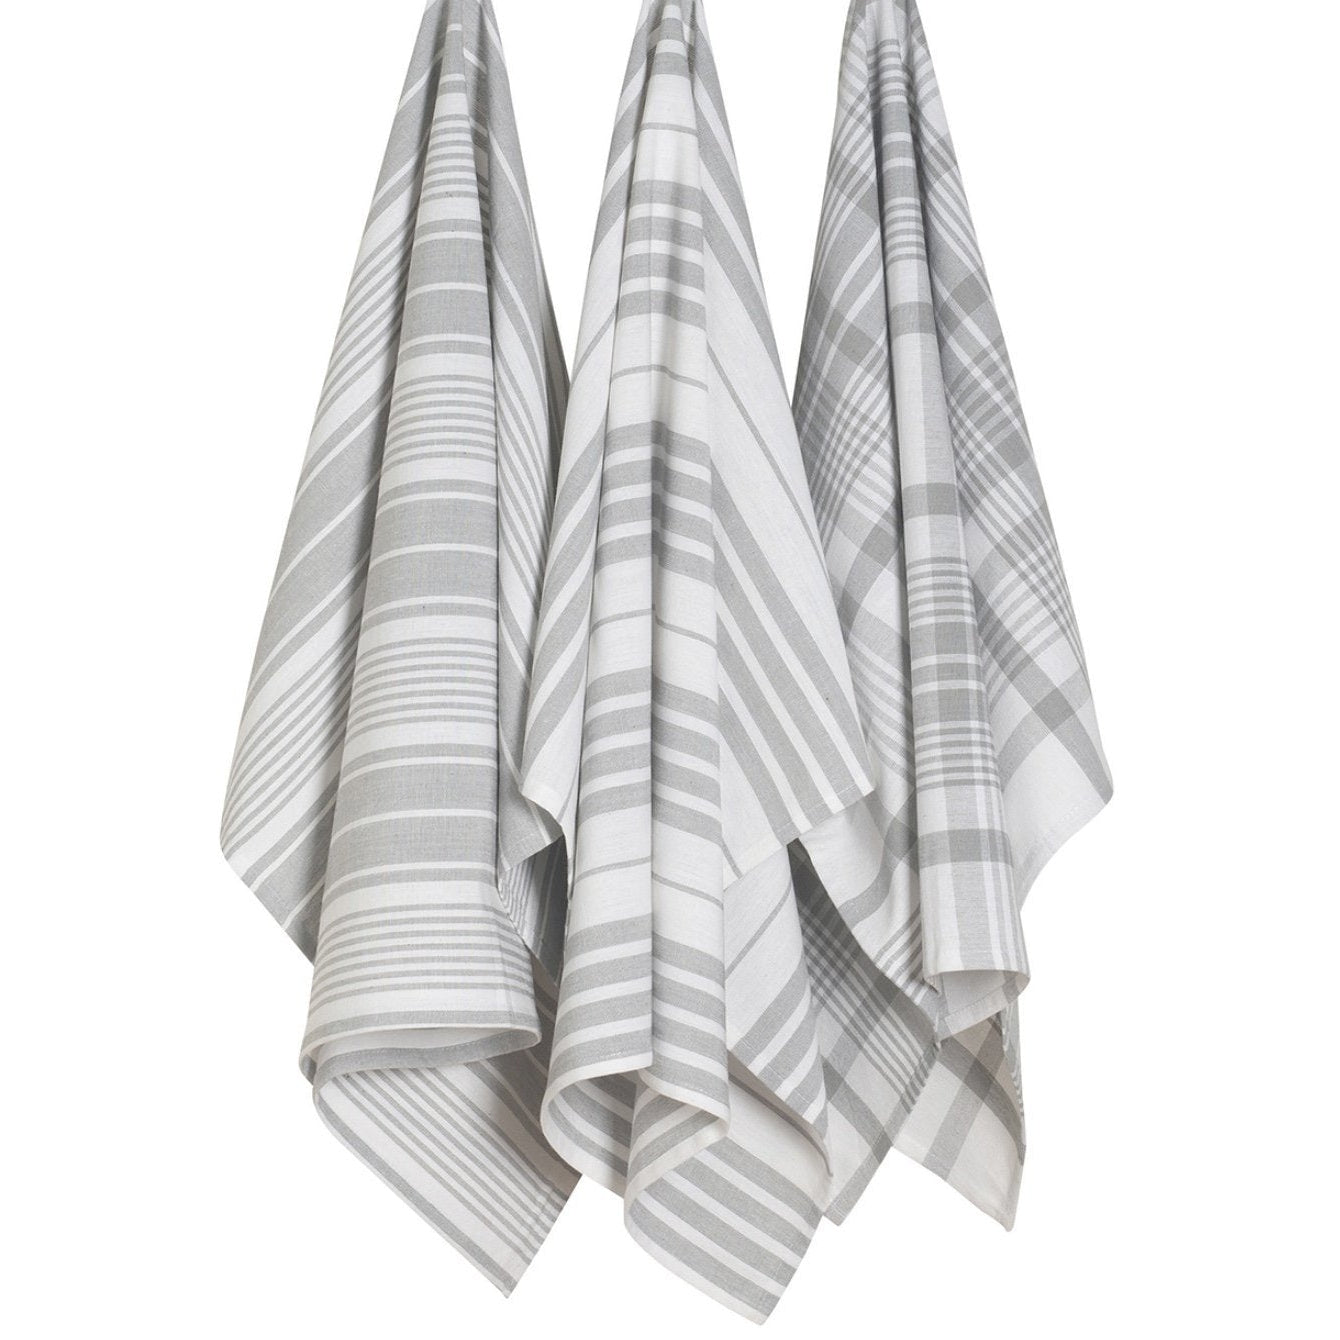 Tea Towels Jumbo 100% Cotton - Set of 3 Kitchen Now Designs Prettycleanshop